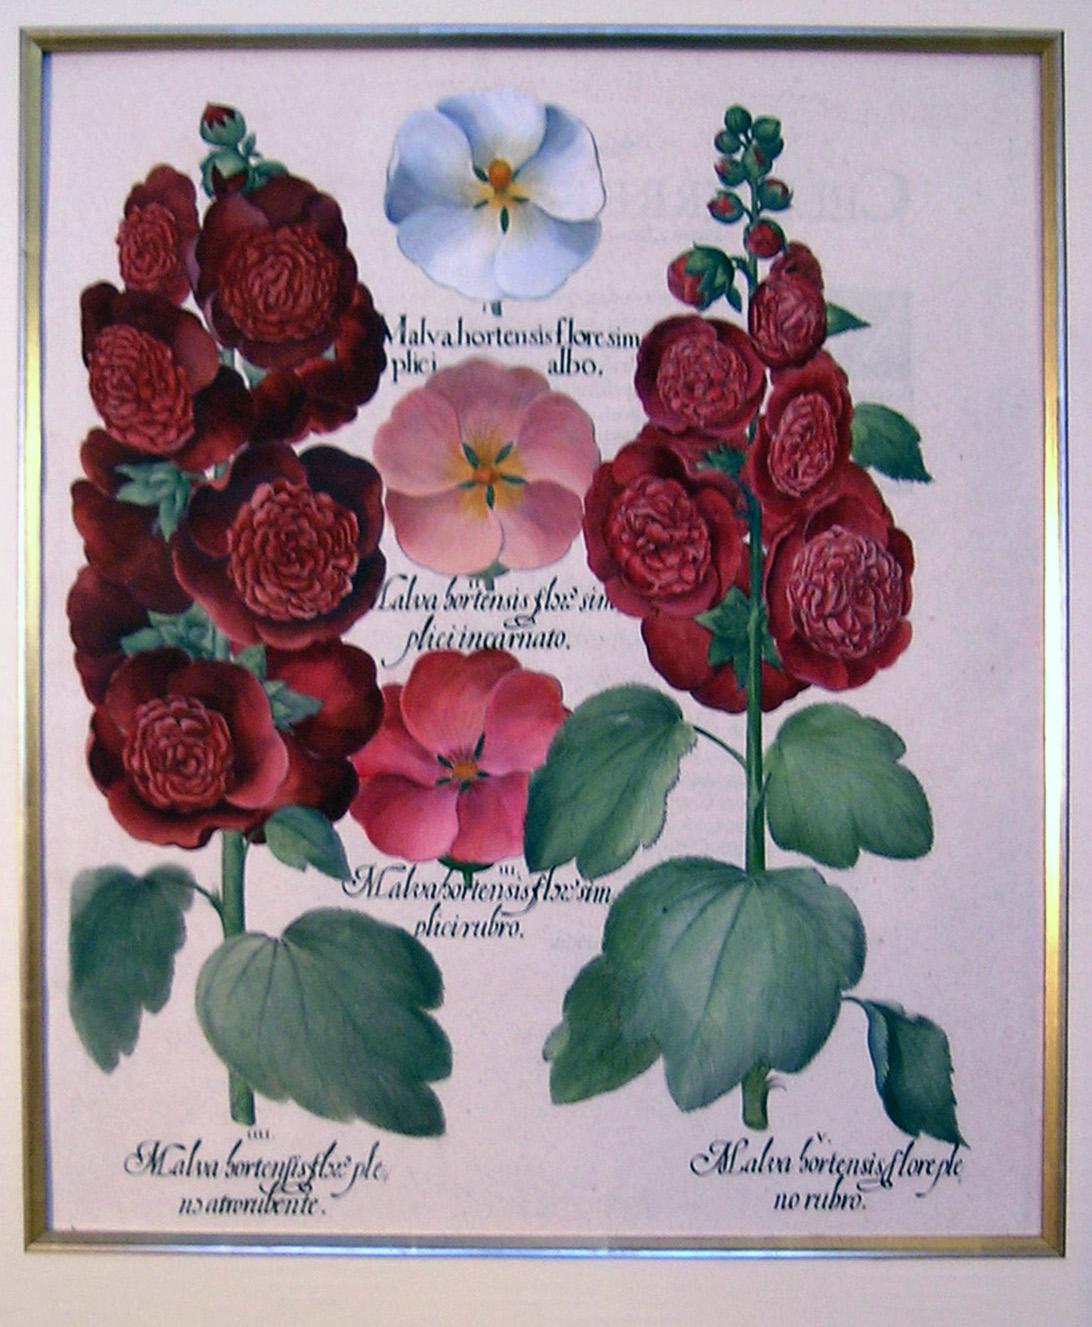 Malva hortensis flore...  (Hollyhock, Mallow) - Academic Print by Basilius Besler